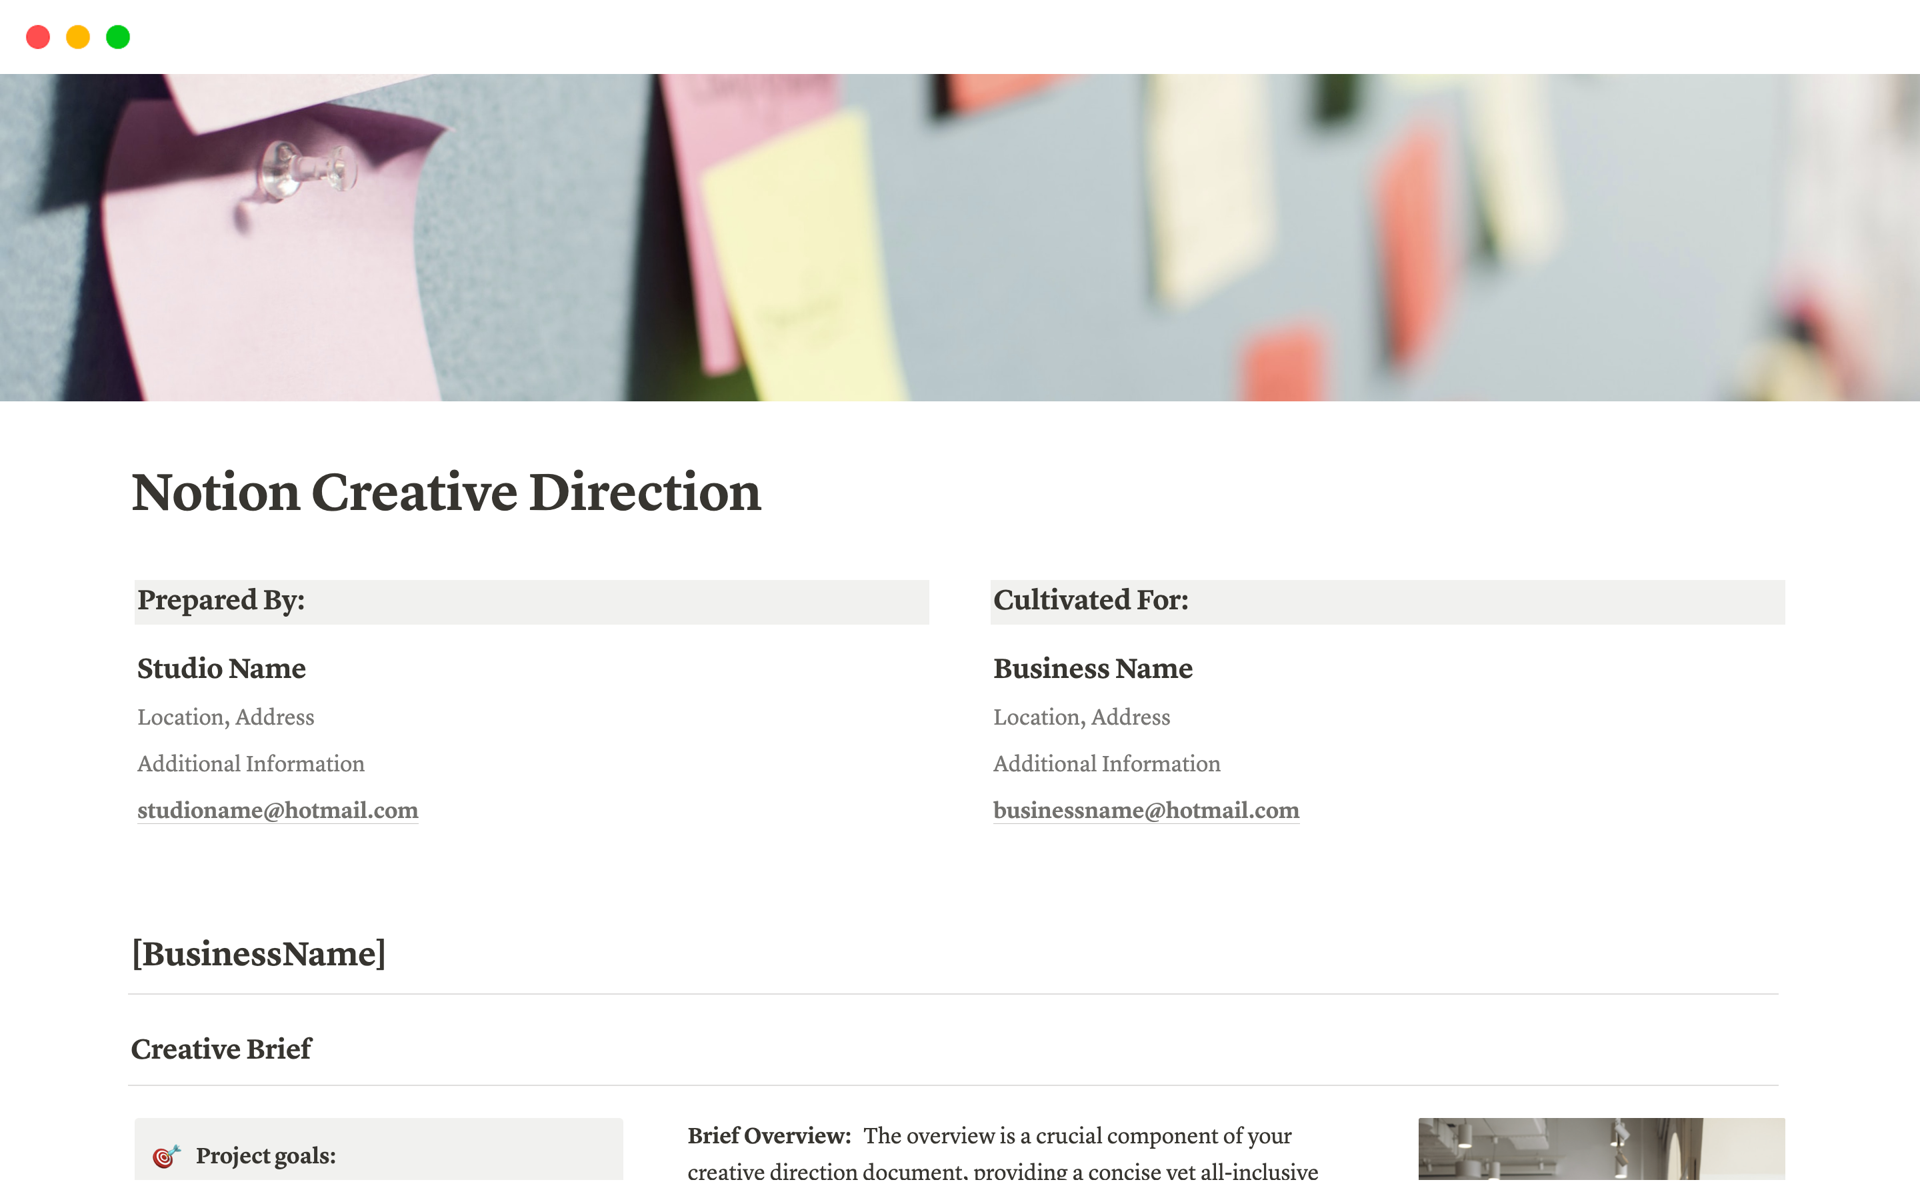 notion-creative-direction-selwyn-goodman-desktop